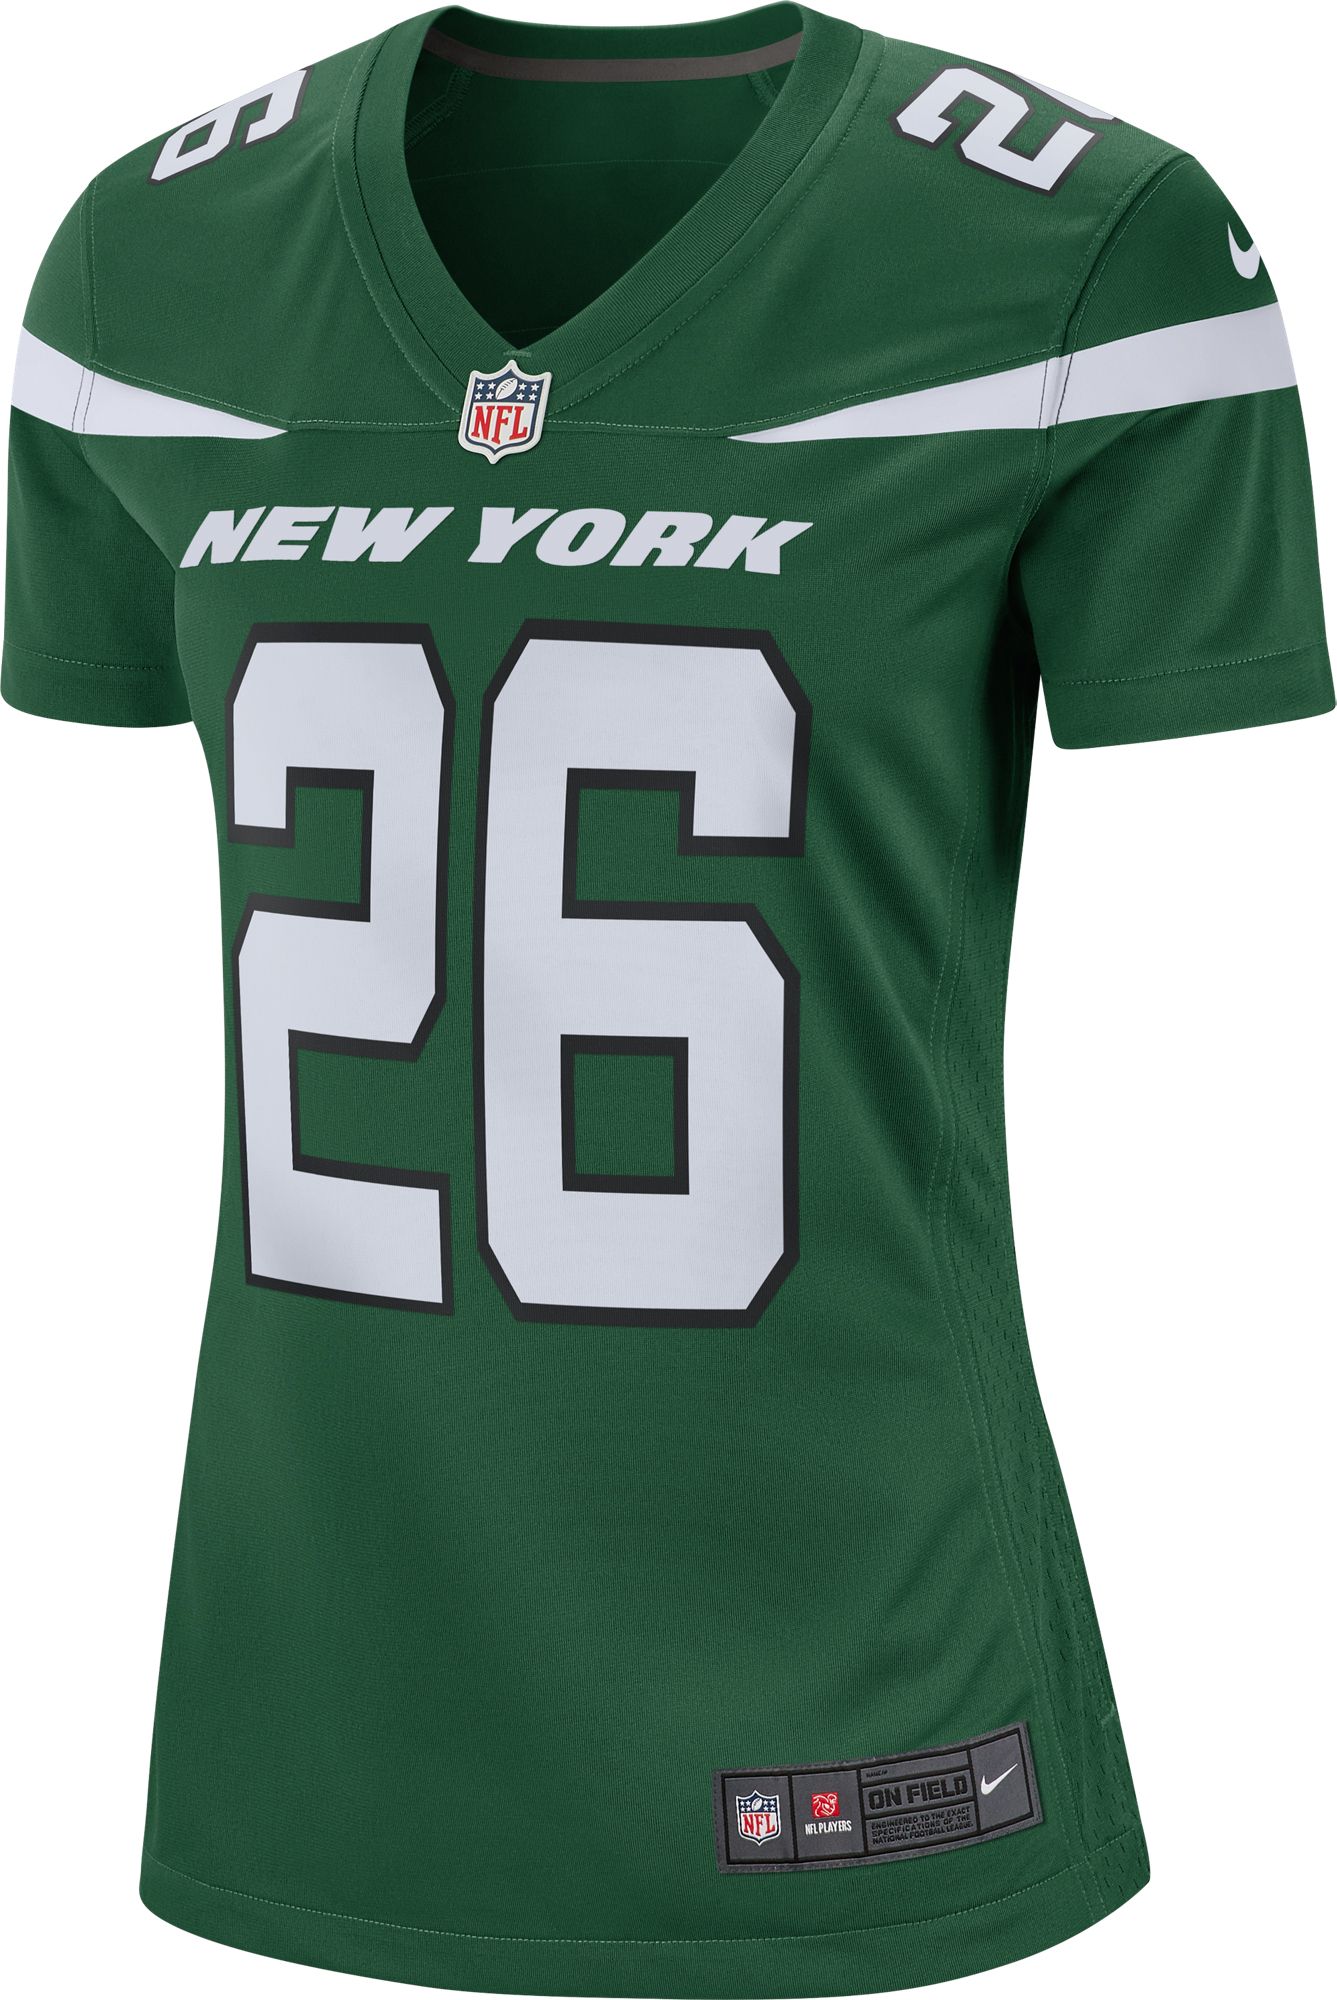 new york jets womens jersey